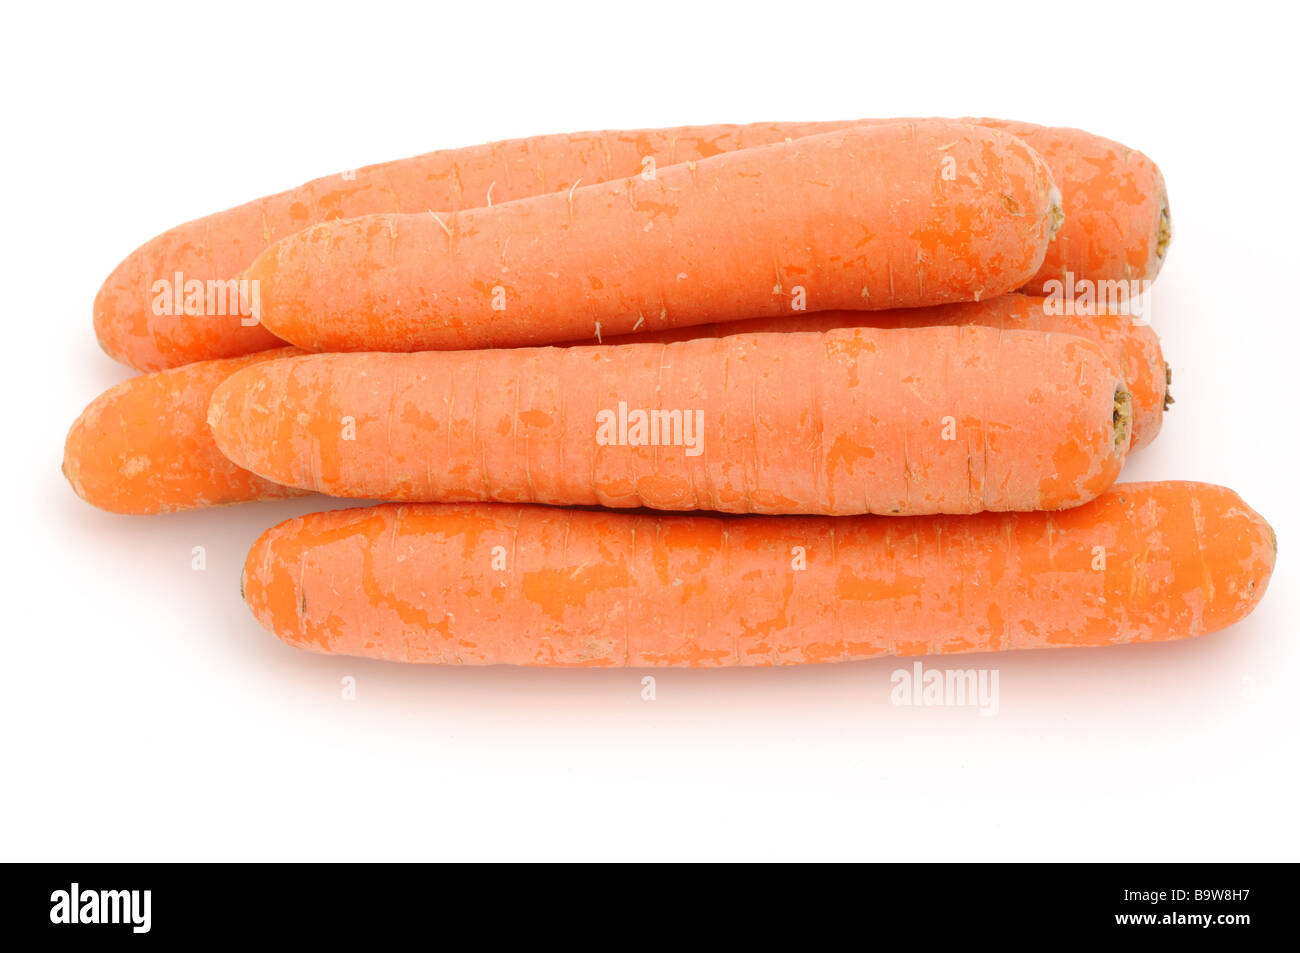 Carrots isolated on white background Stock Photo